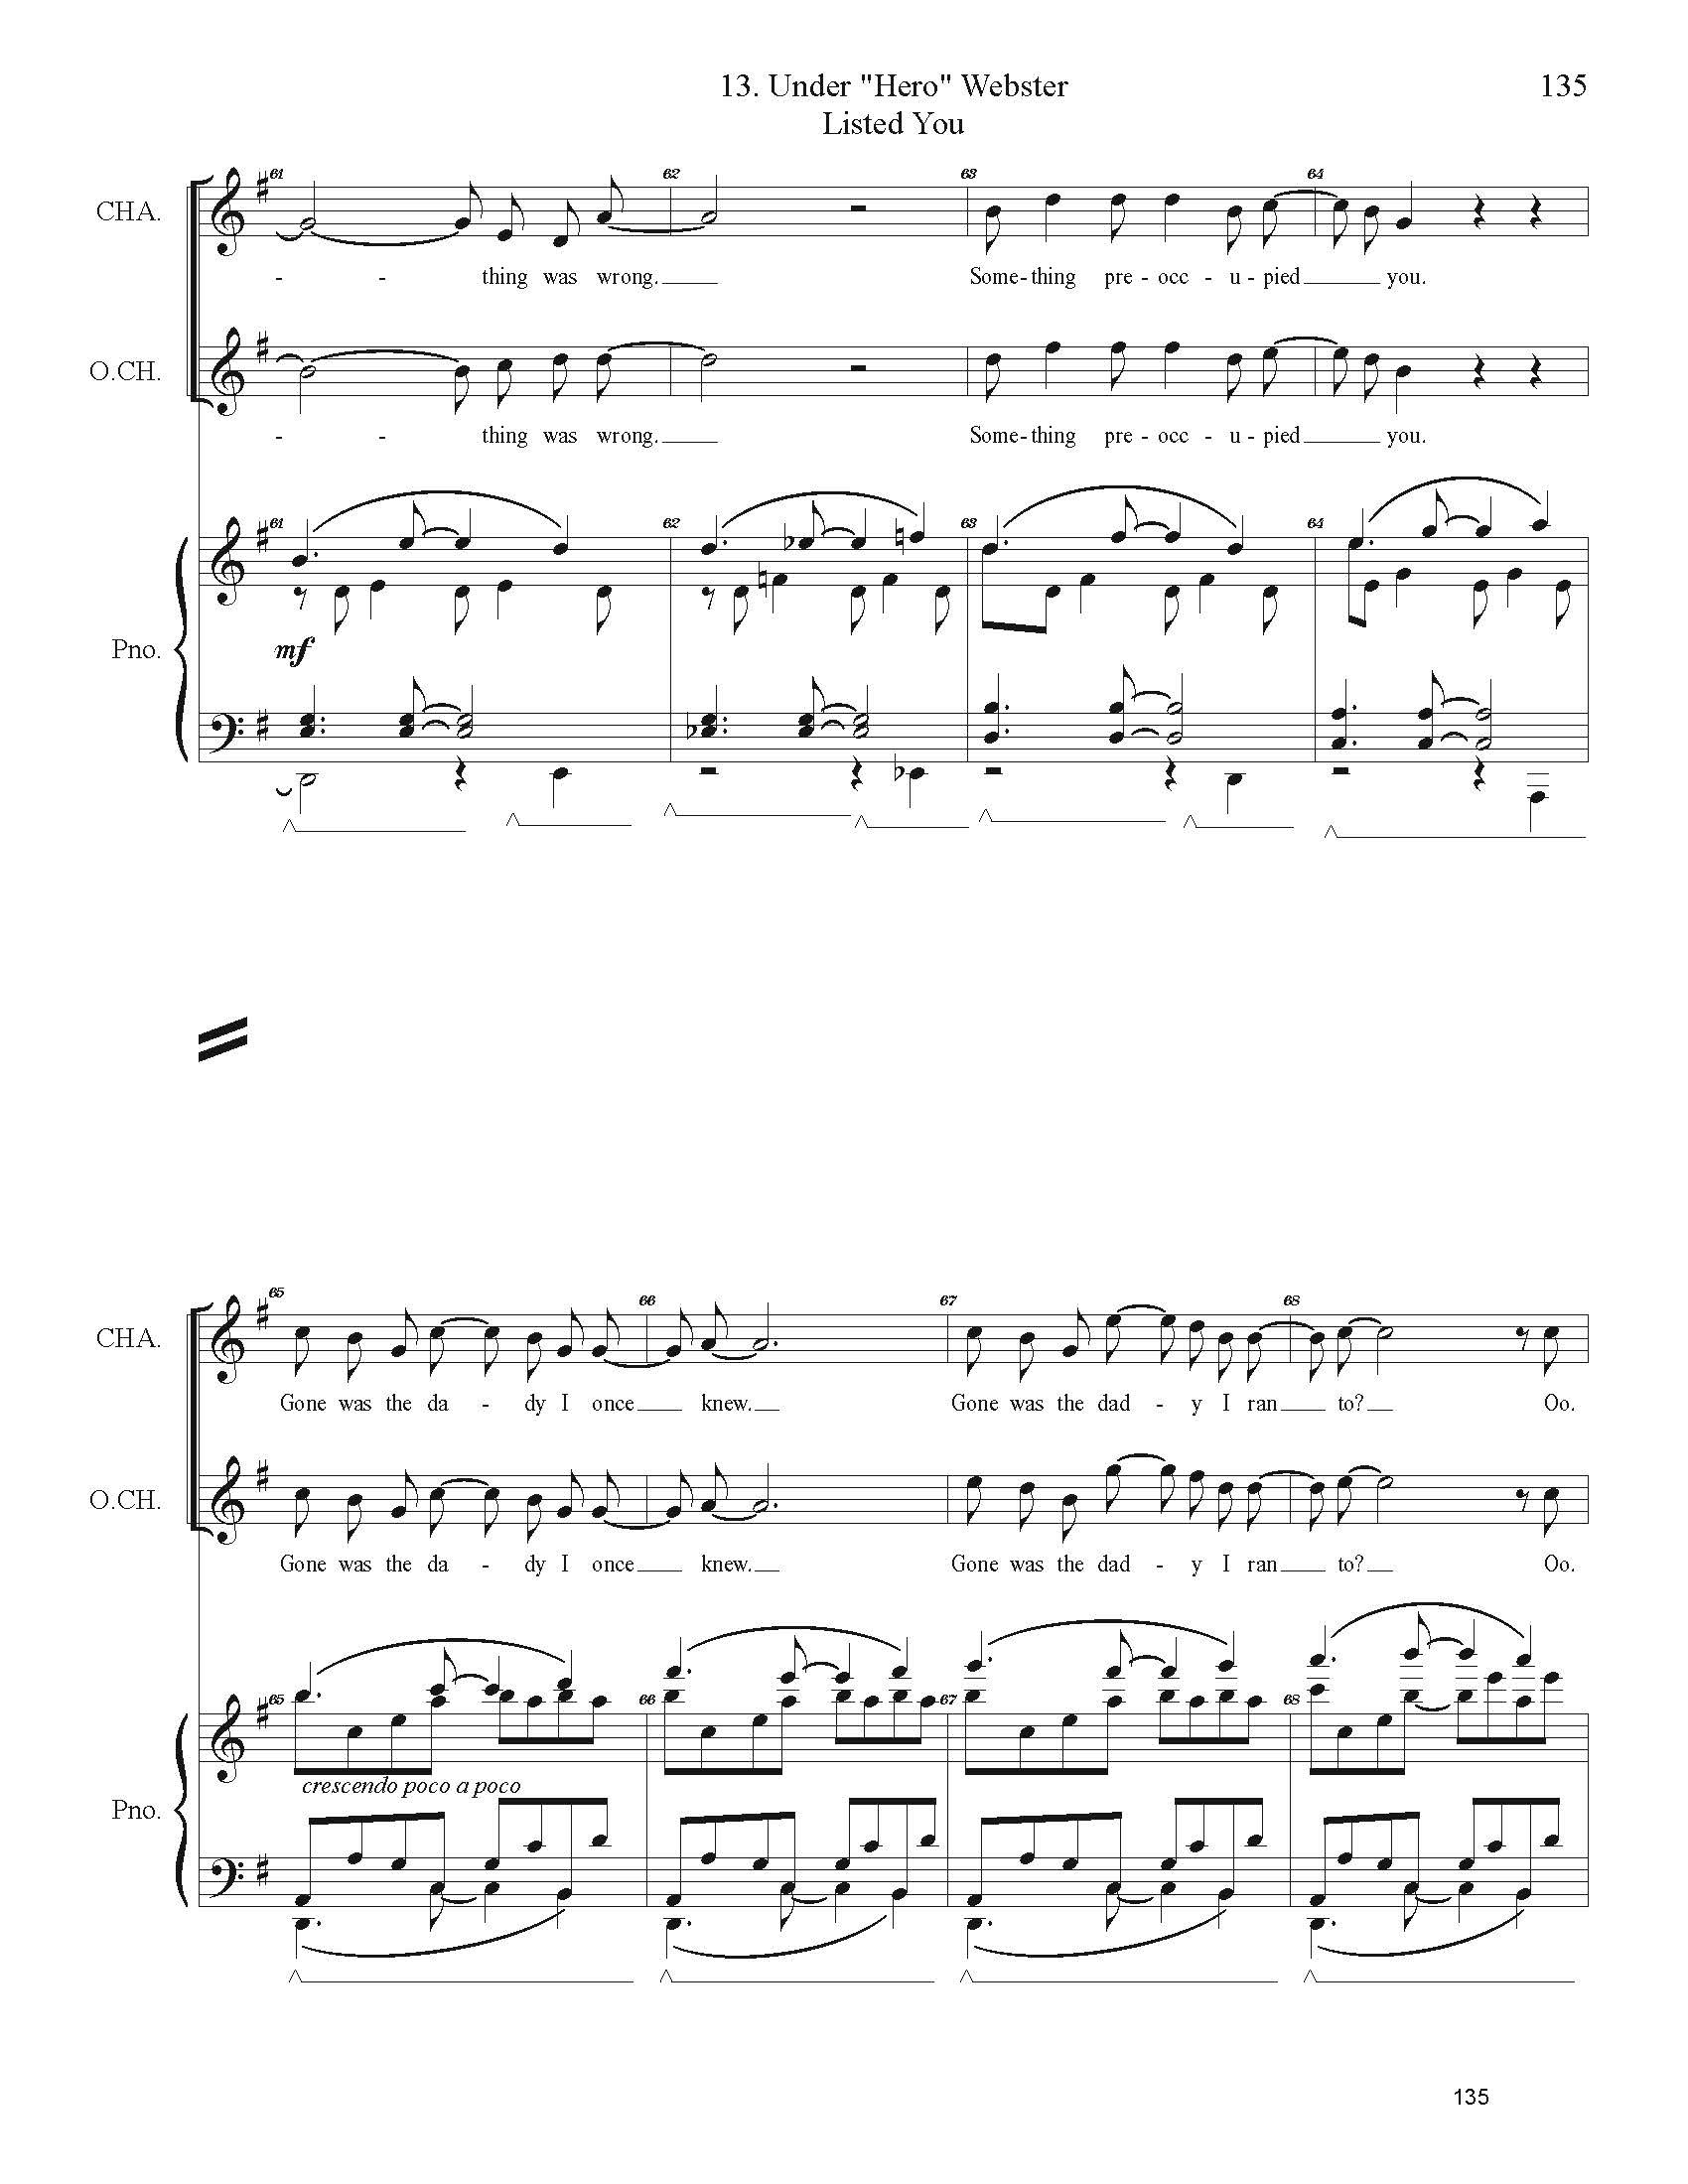 FULL PIANO VOCAL SCORE DRAFT 1 - Score_Page_135.jpg